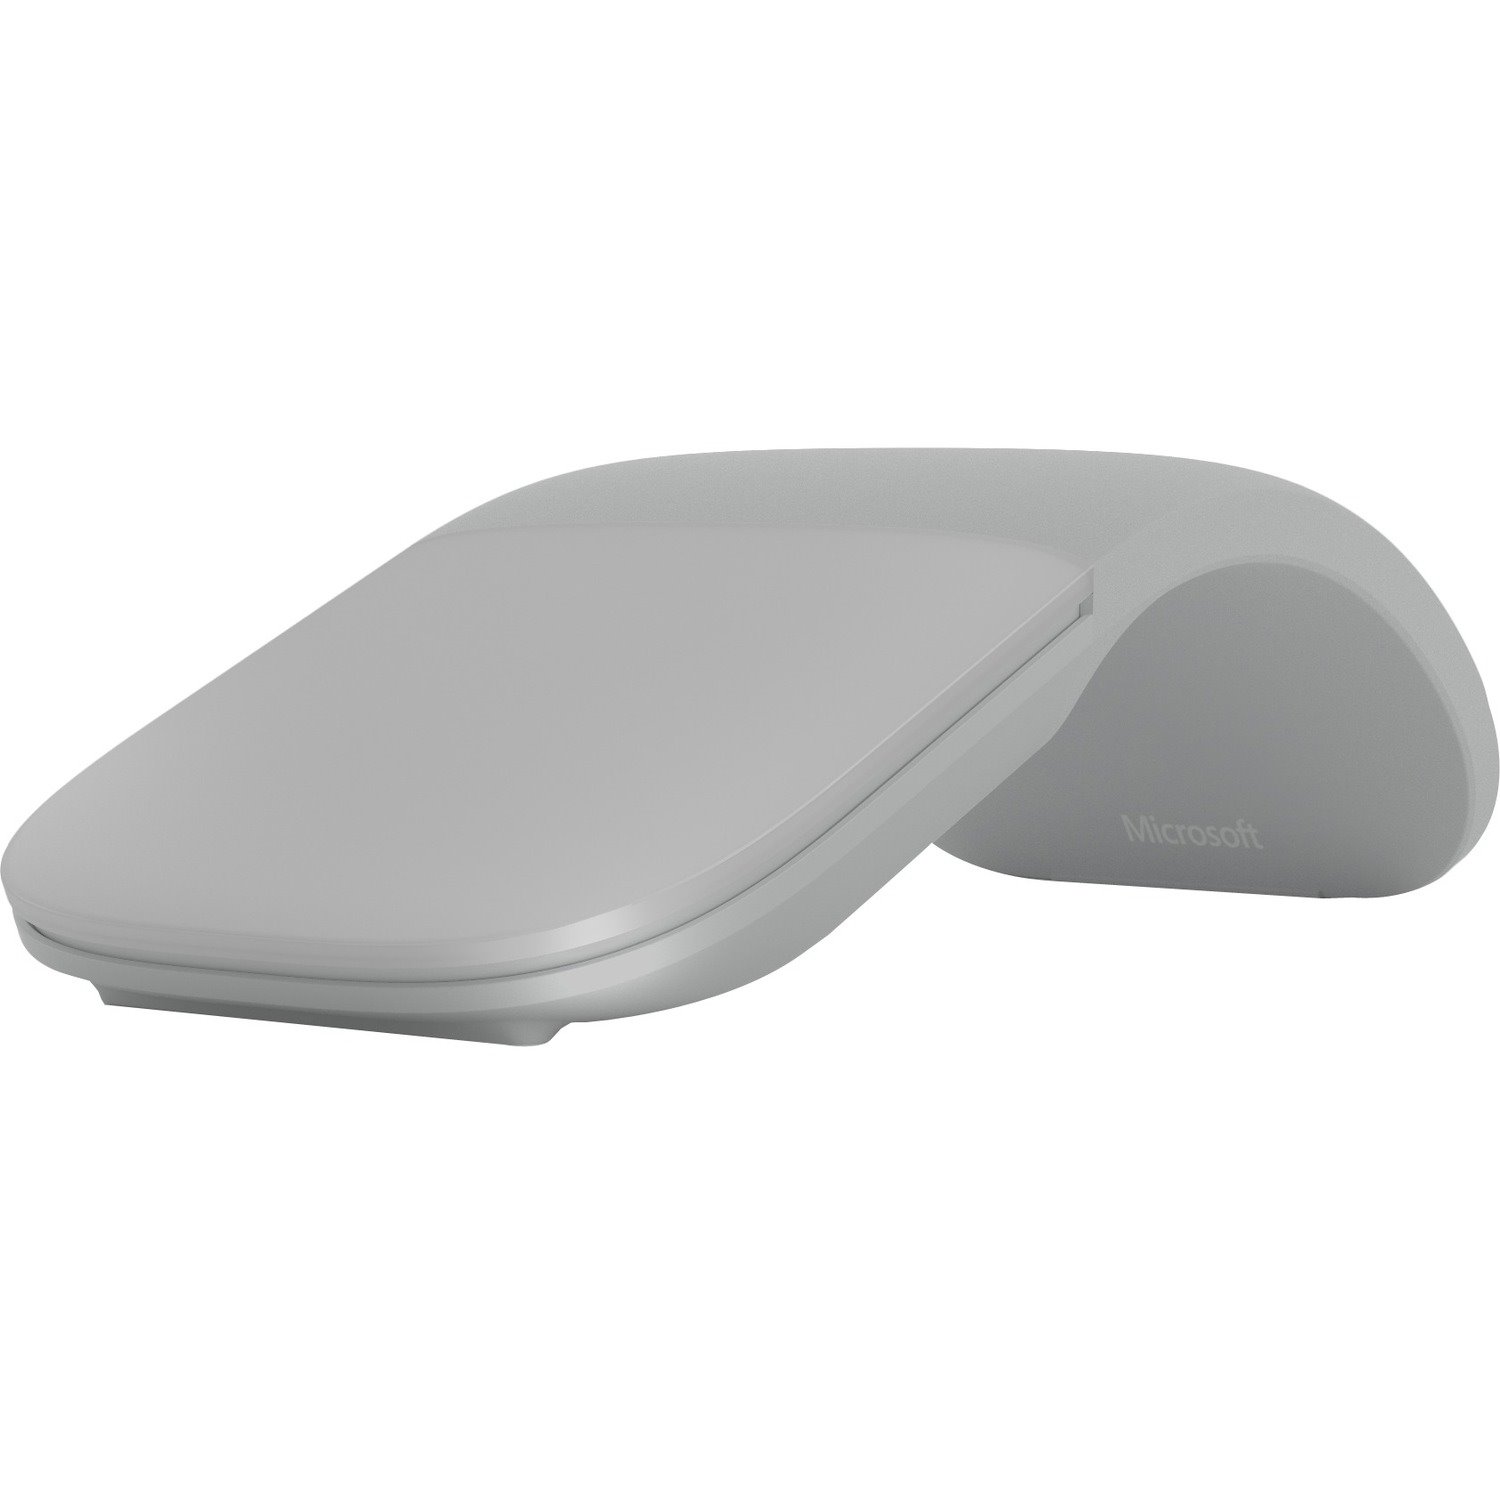 3644567 Surface Arc Mouse - Light Grey